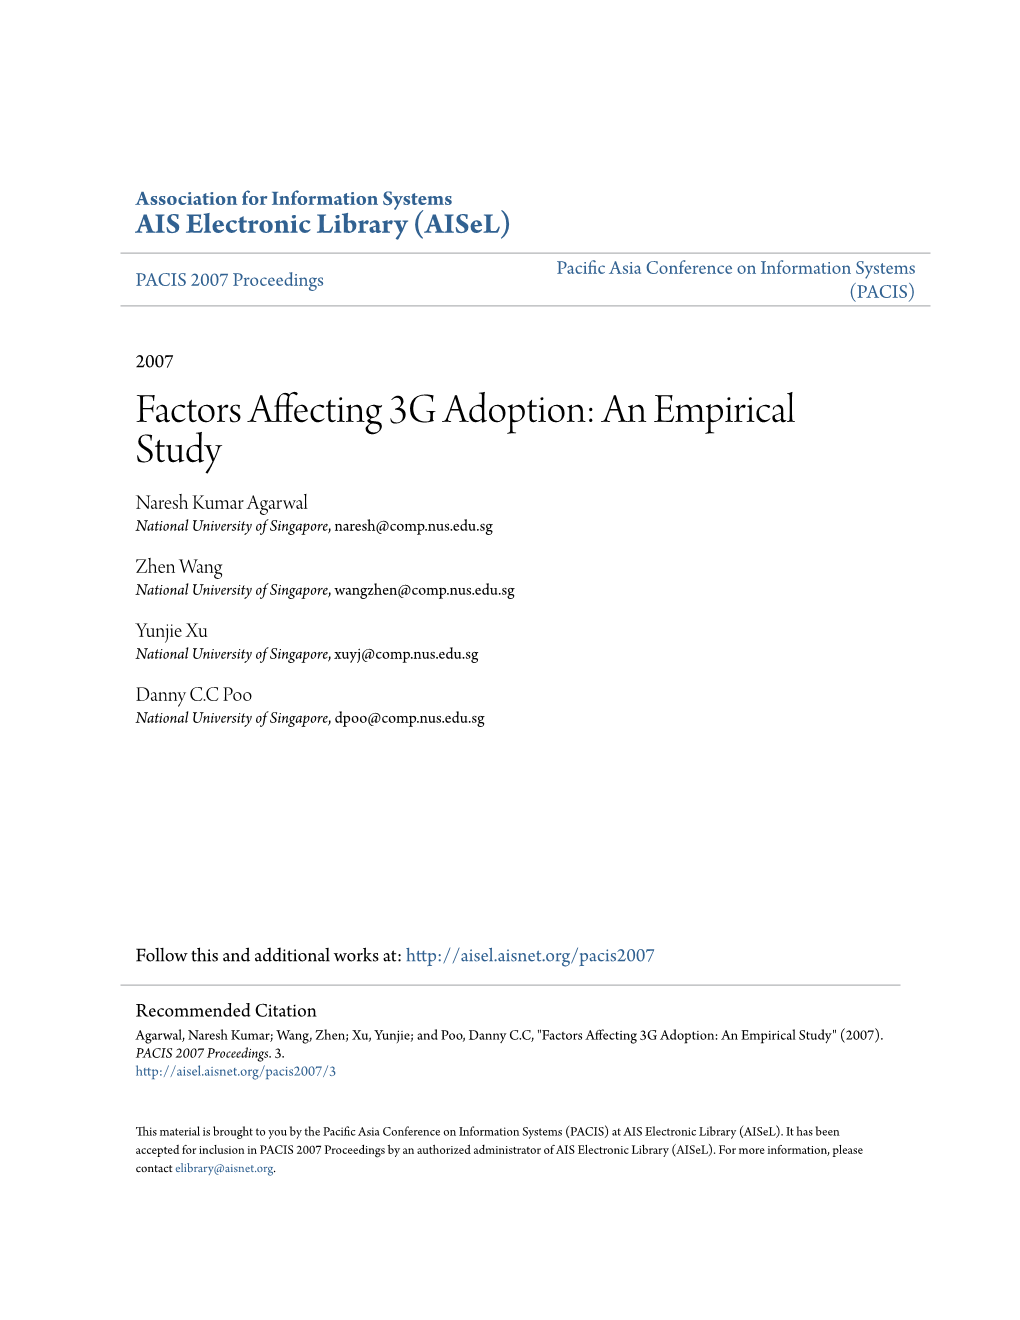 Factors Affecting 3G Adoption: an Empirical Study Naresh Kumar Agarwal National University of Singapore, Naresh@Comp.Nus.Edu.Sg